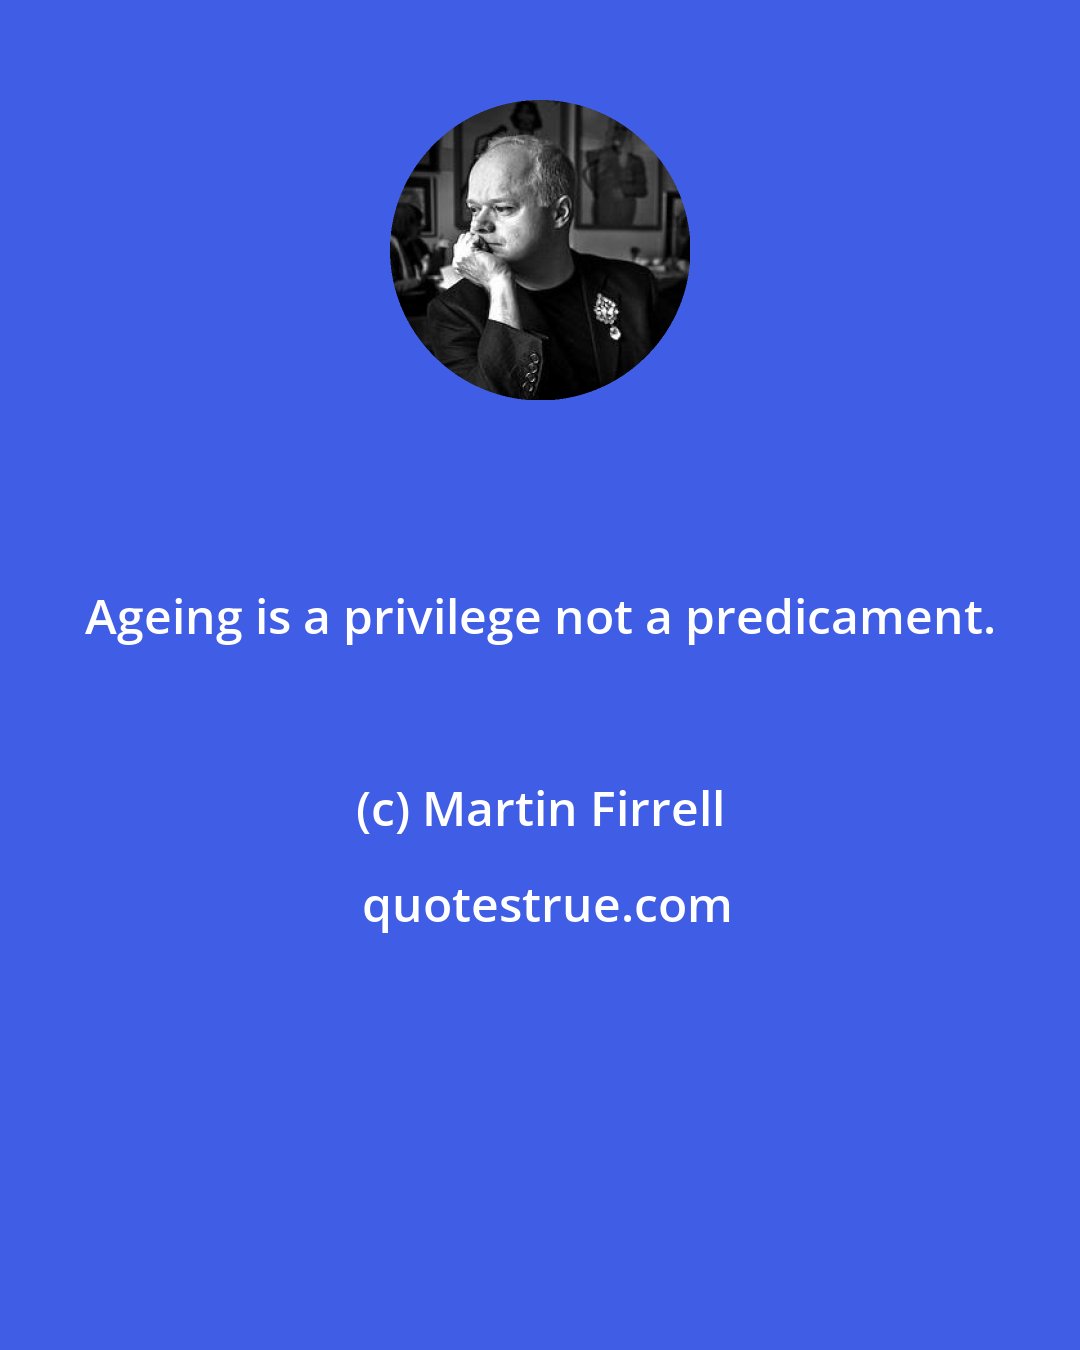 Martin Firrell: Ageing is a privilege not a predicament.